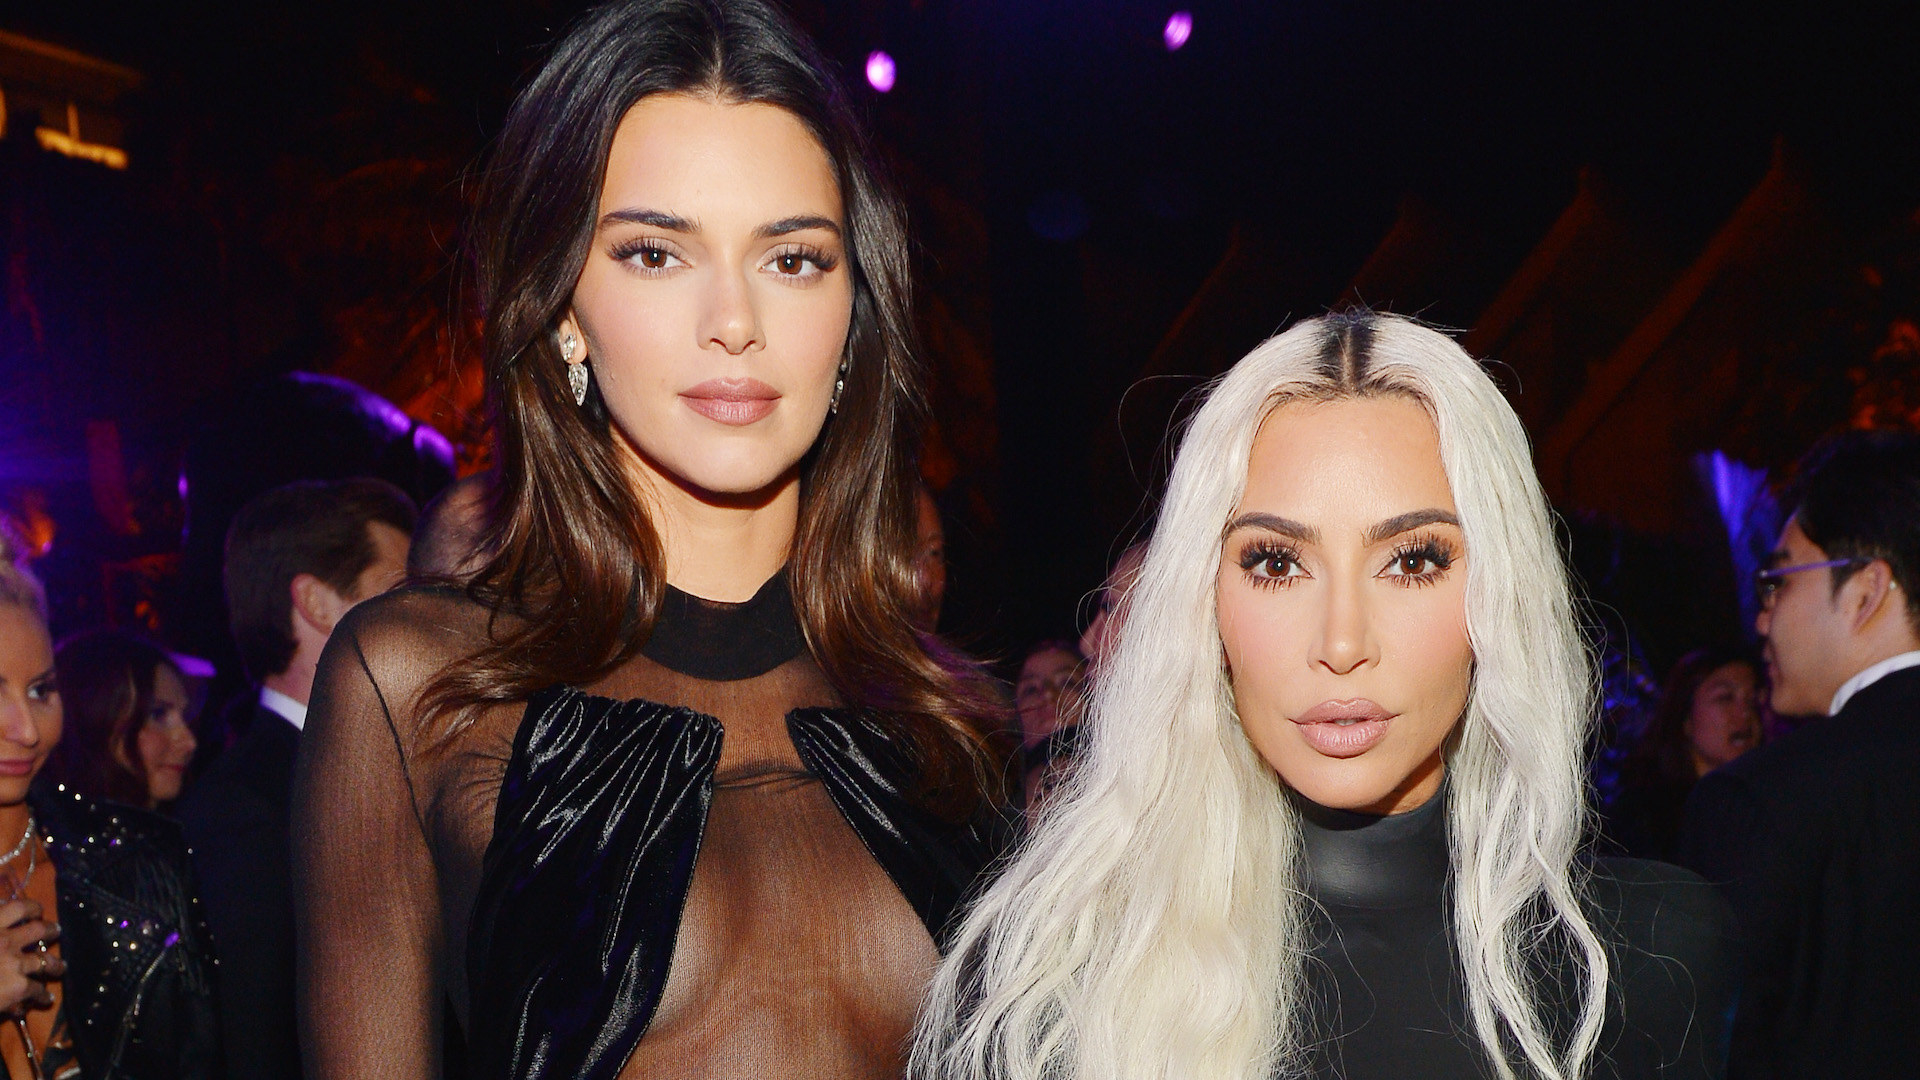 Kim Kardashian Trolls Kendall Jenner With Shirt of Her NBA Boyfriends